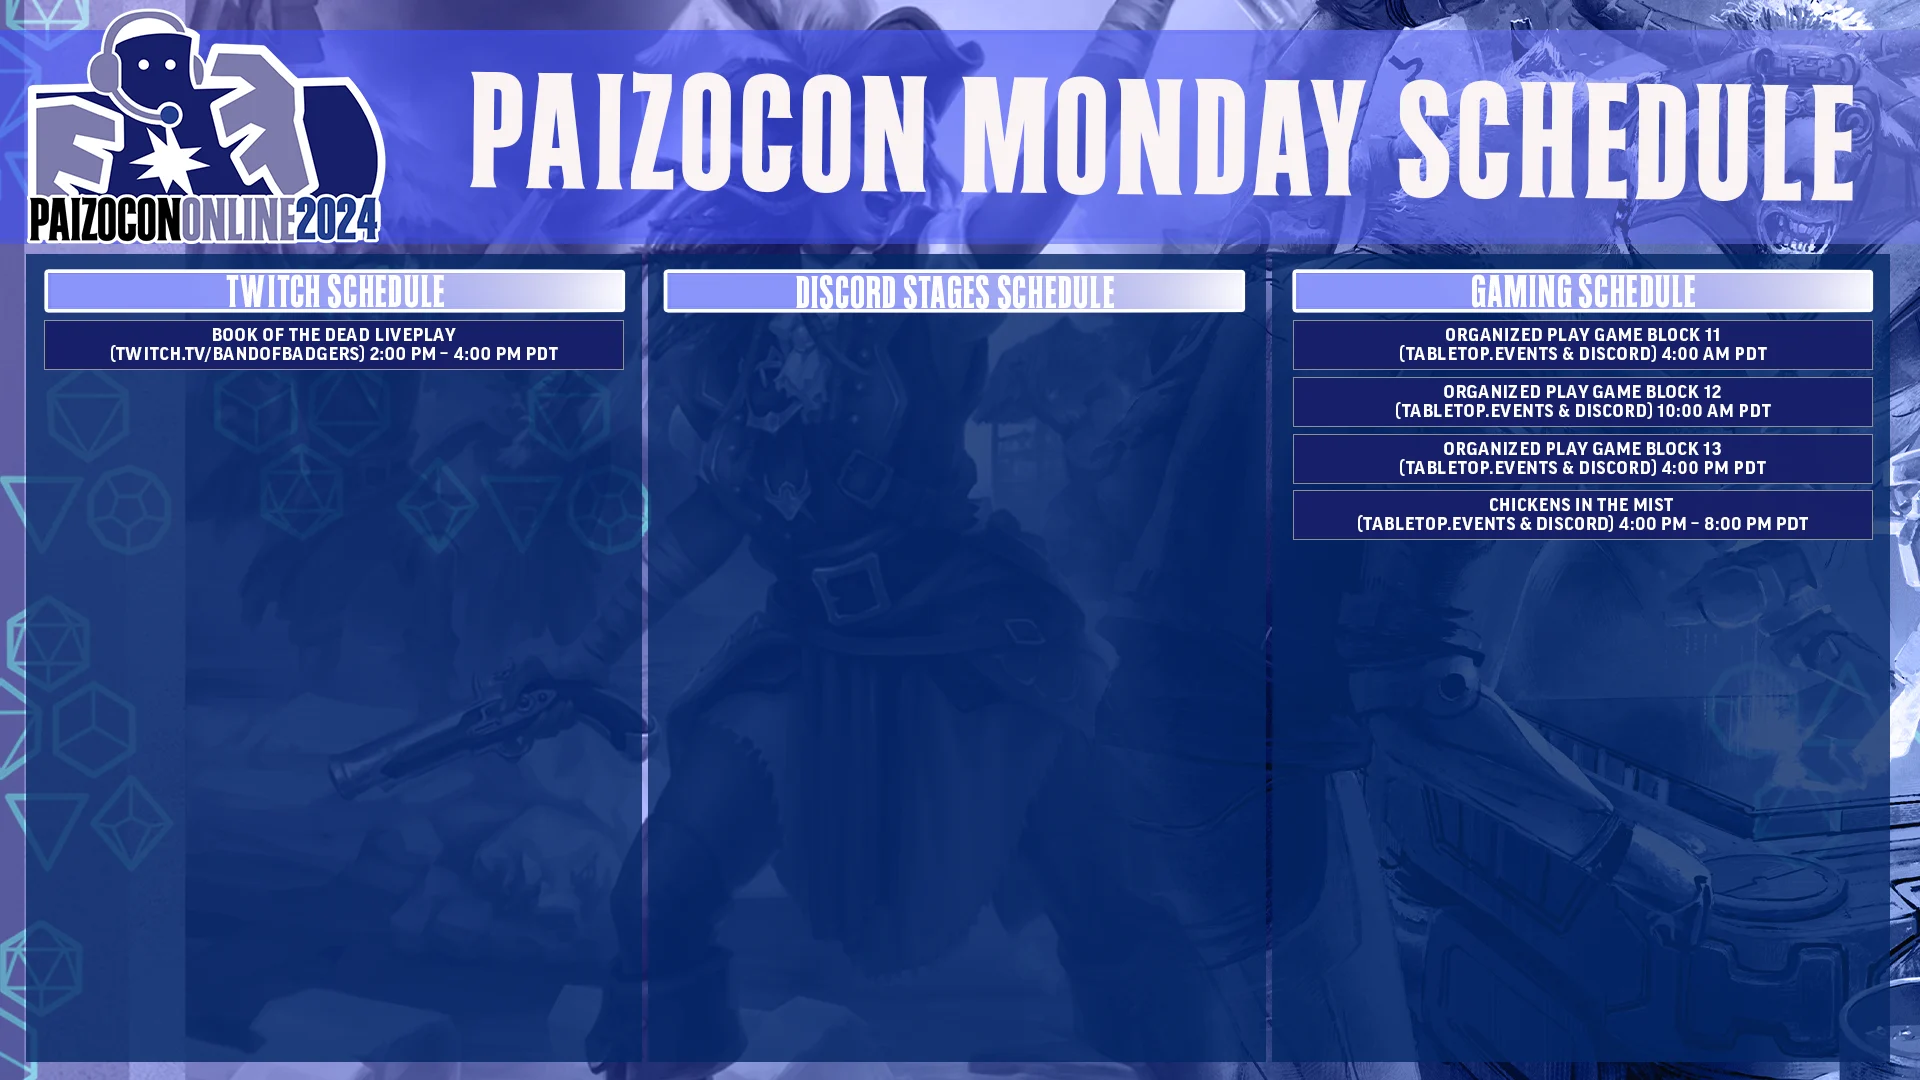 Paizocon Monday Schedule